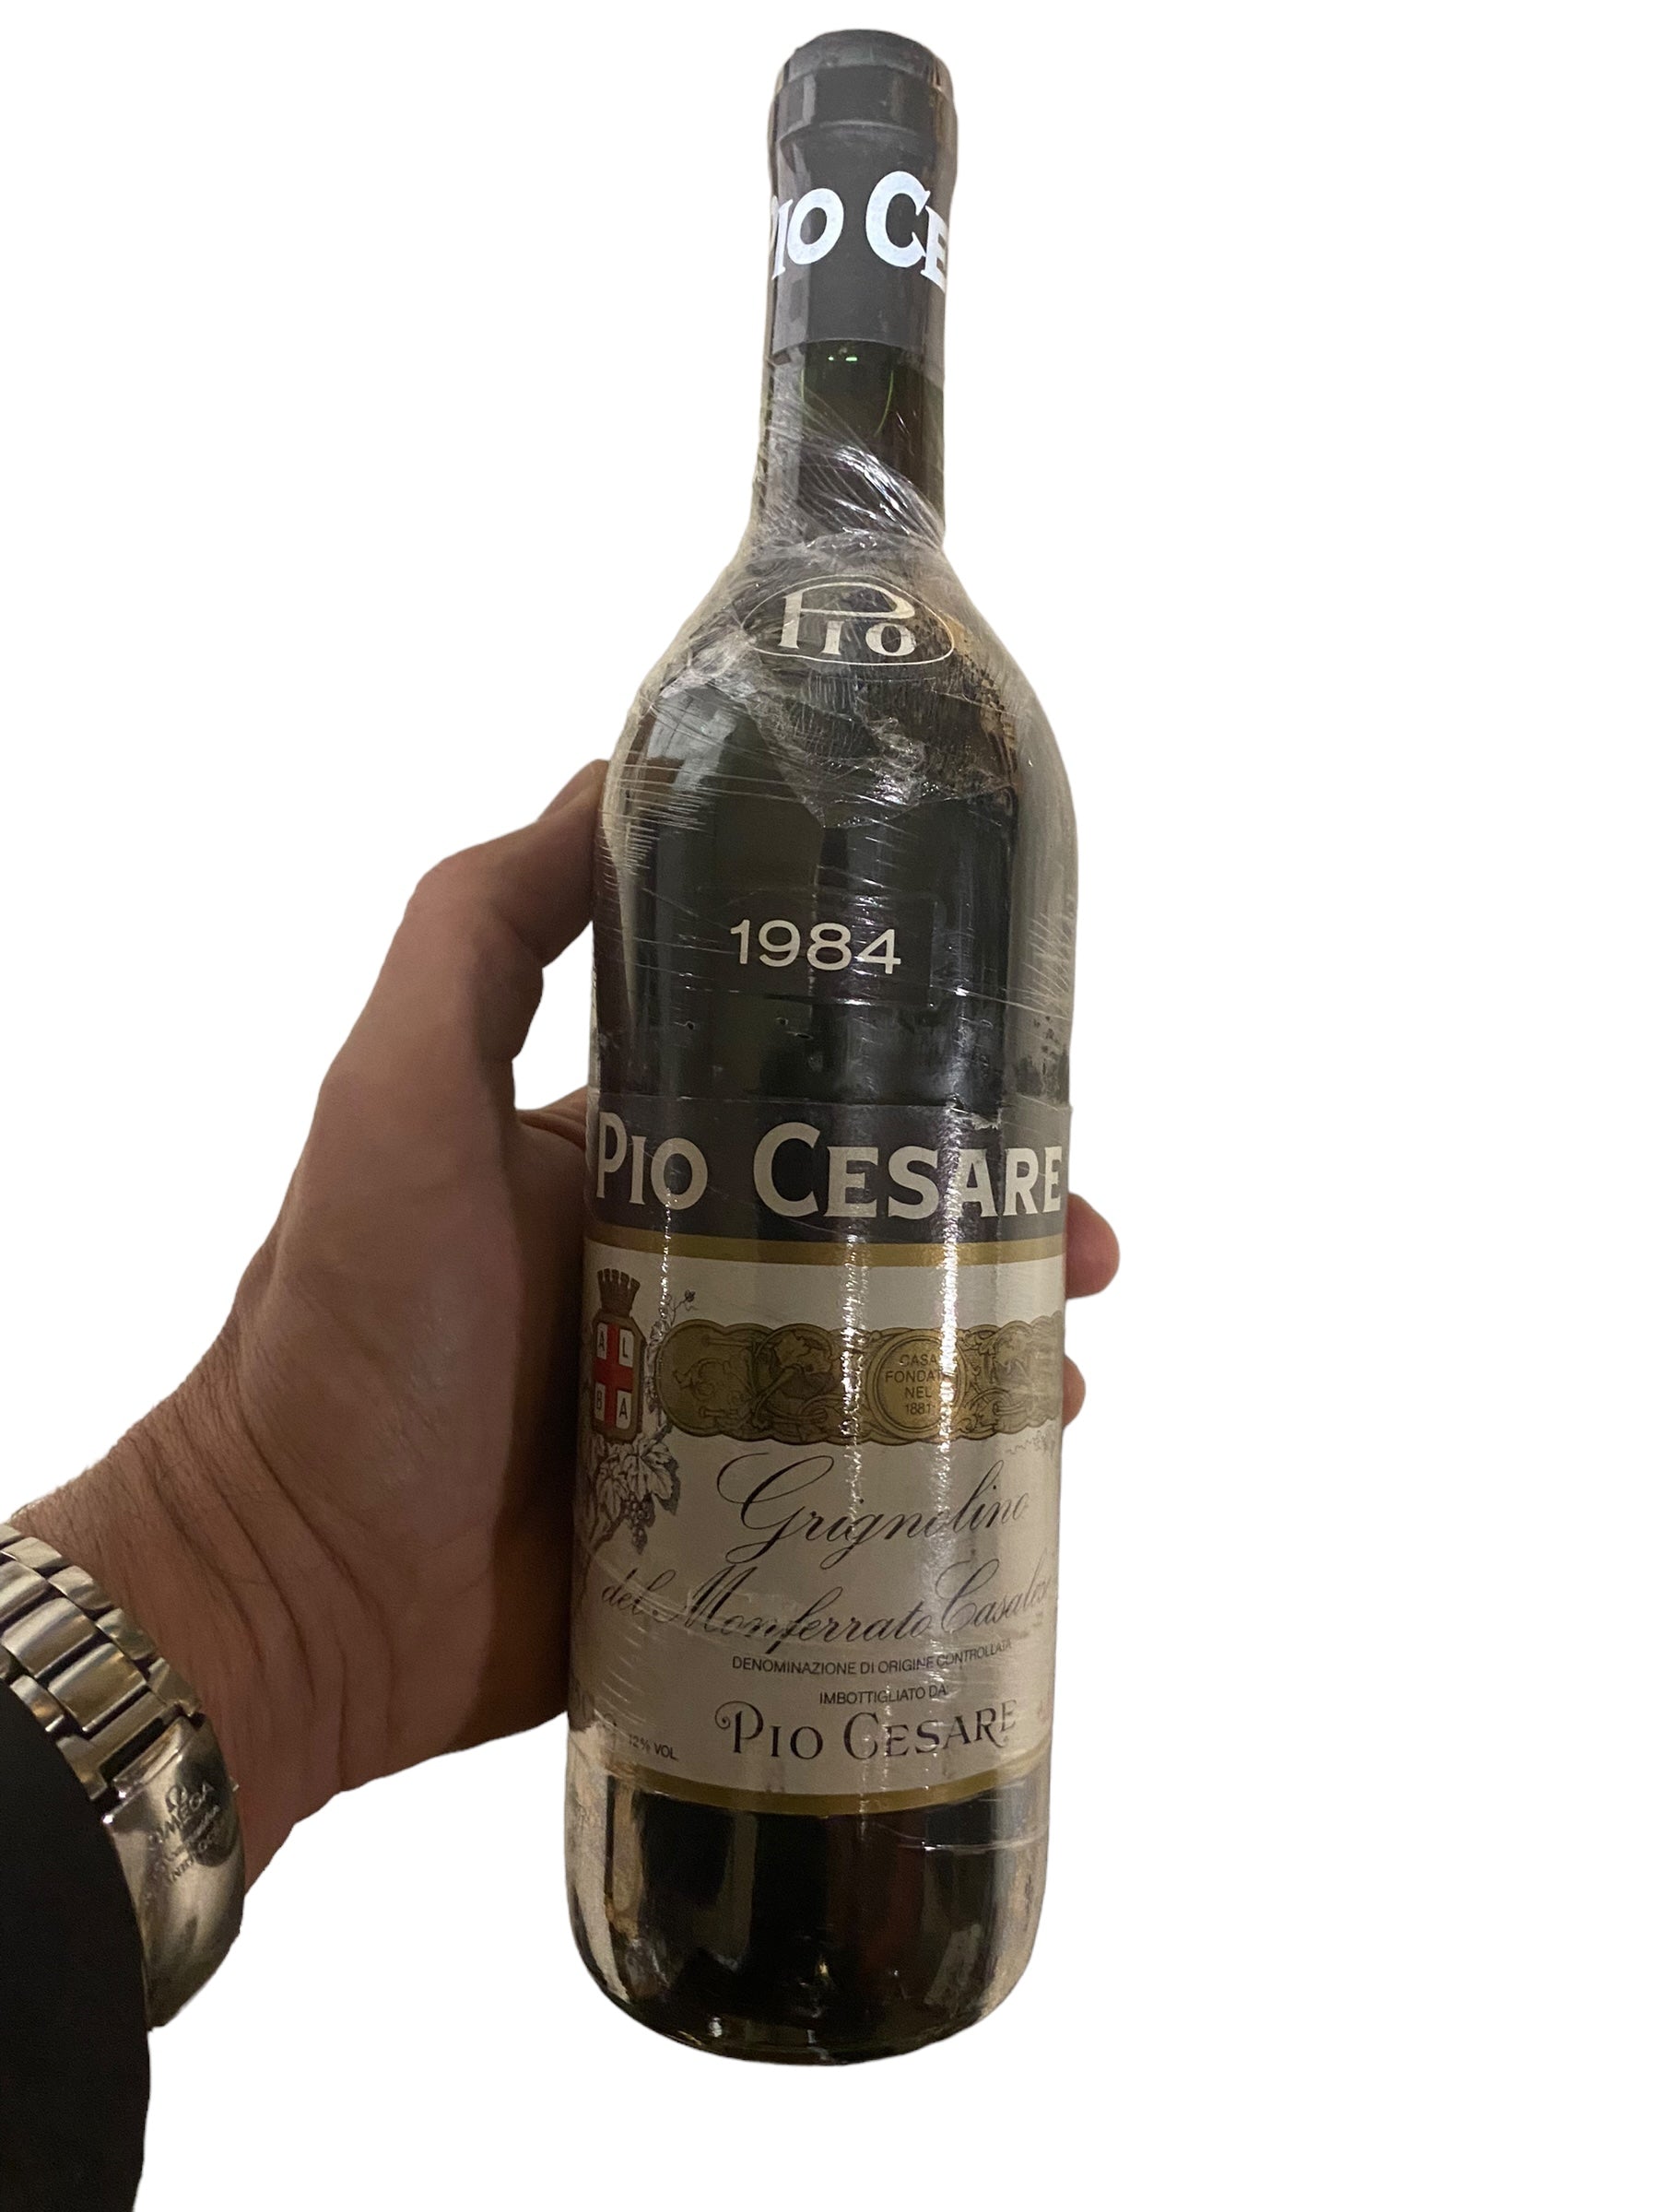 Se Grignolino 1984 PIO CESARE hos Bottleswithhistory.dk